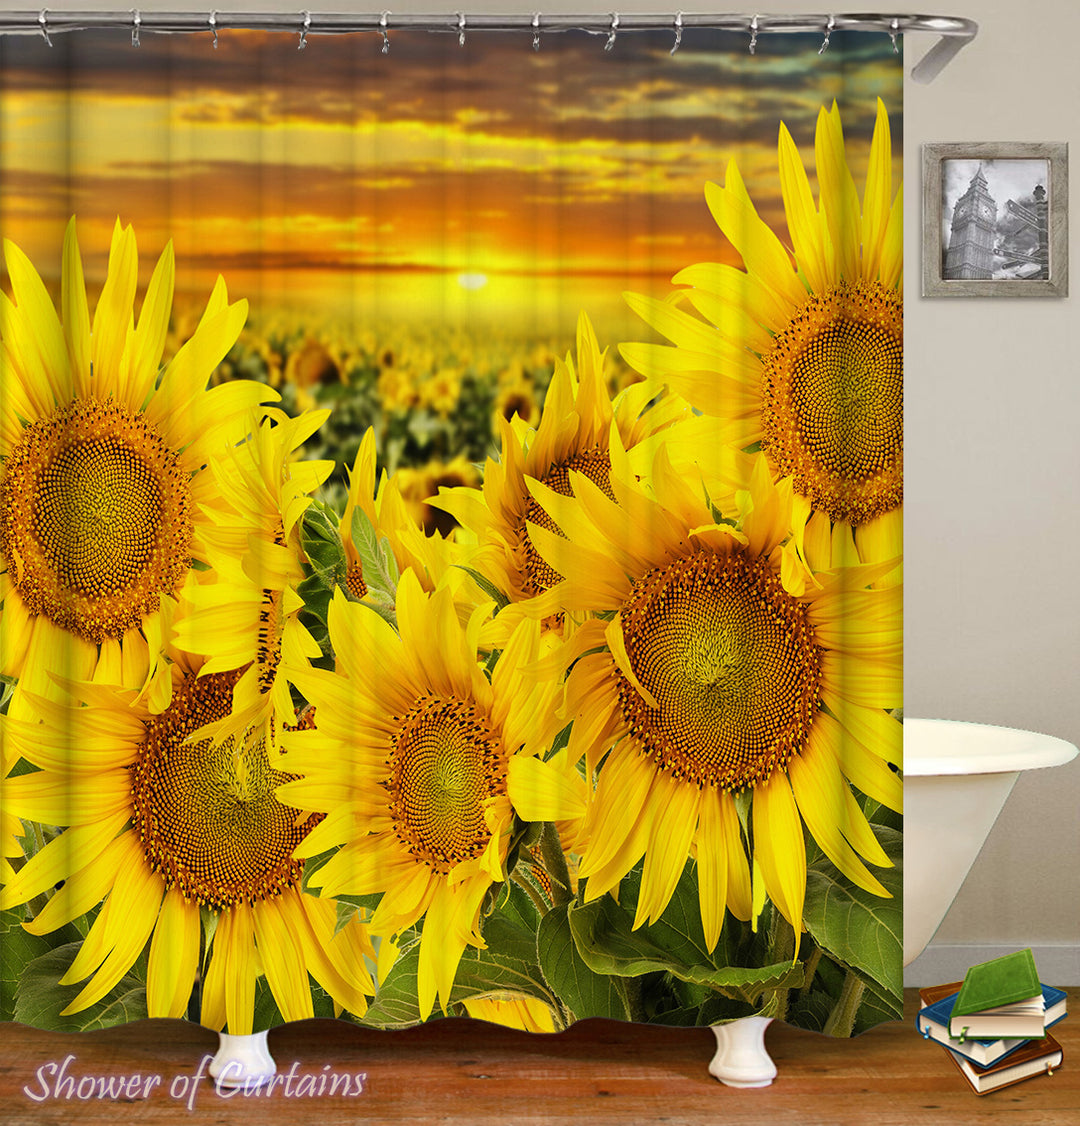 Sunflower shower curtain - Sunset Over The Sunflower Field